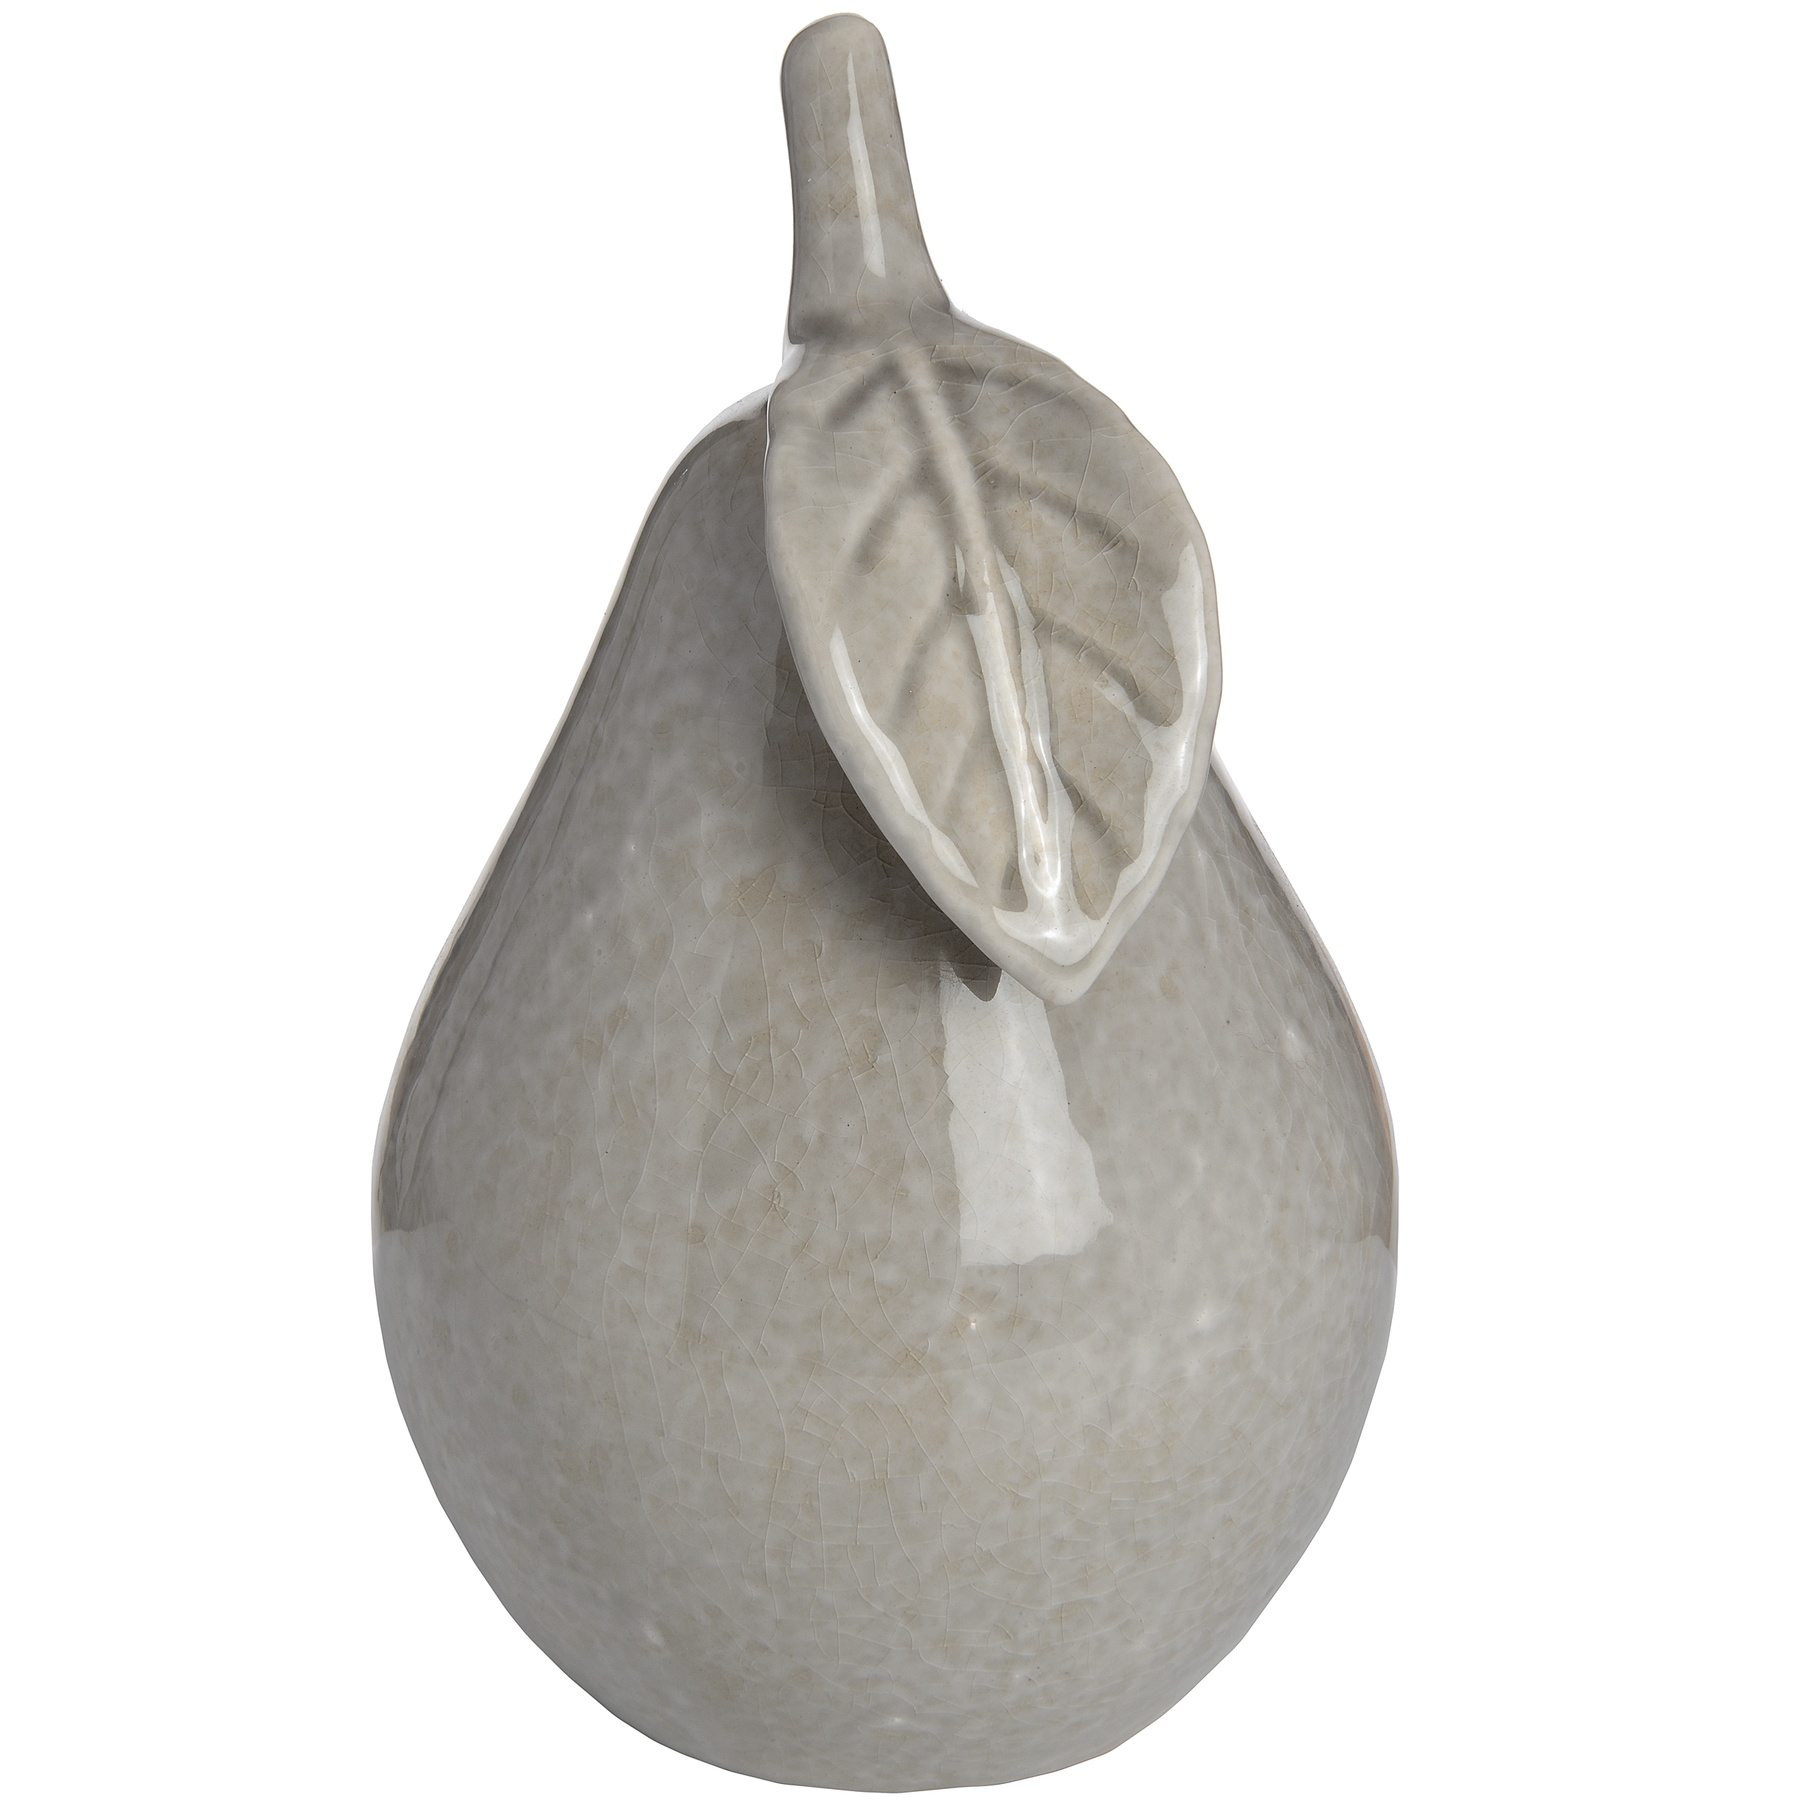 Antique Grey Small Ceramic Pear - Image 1